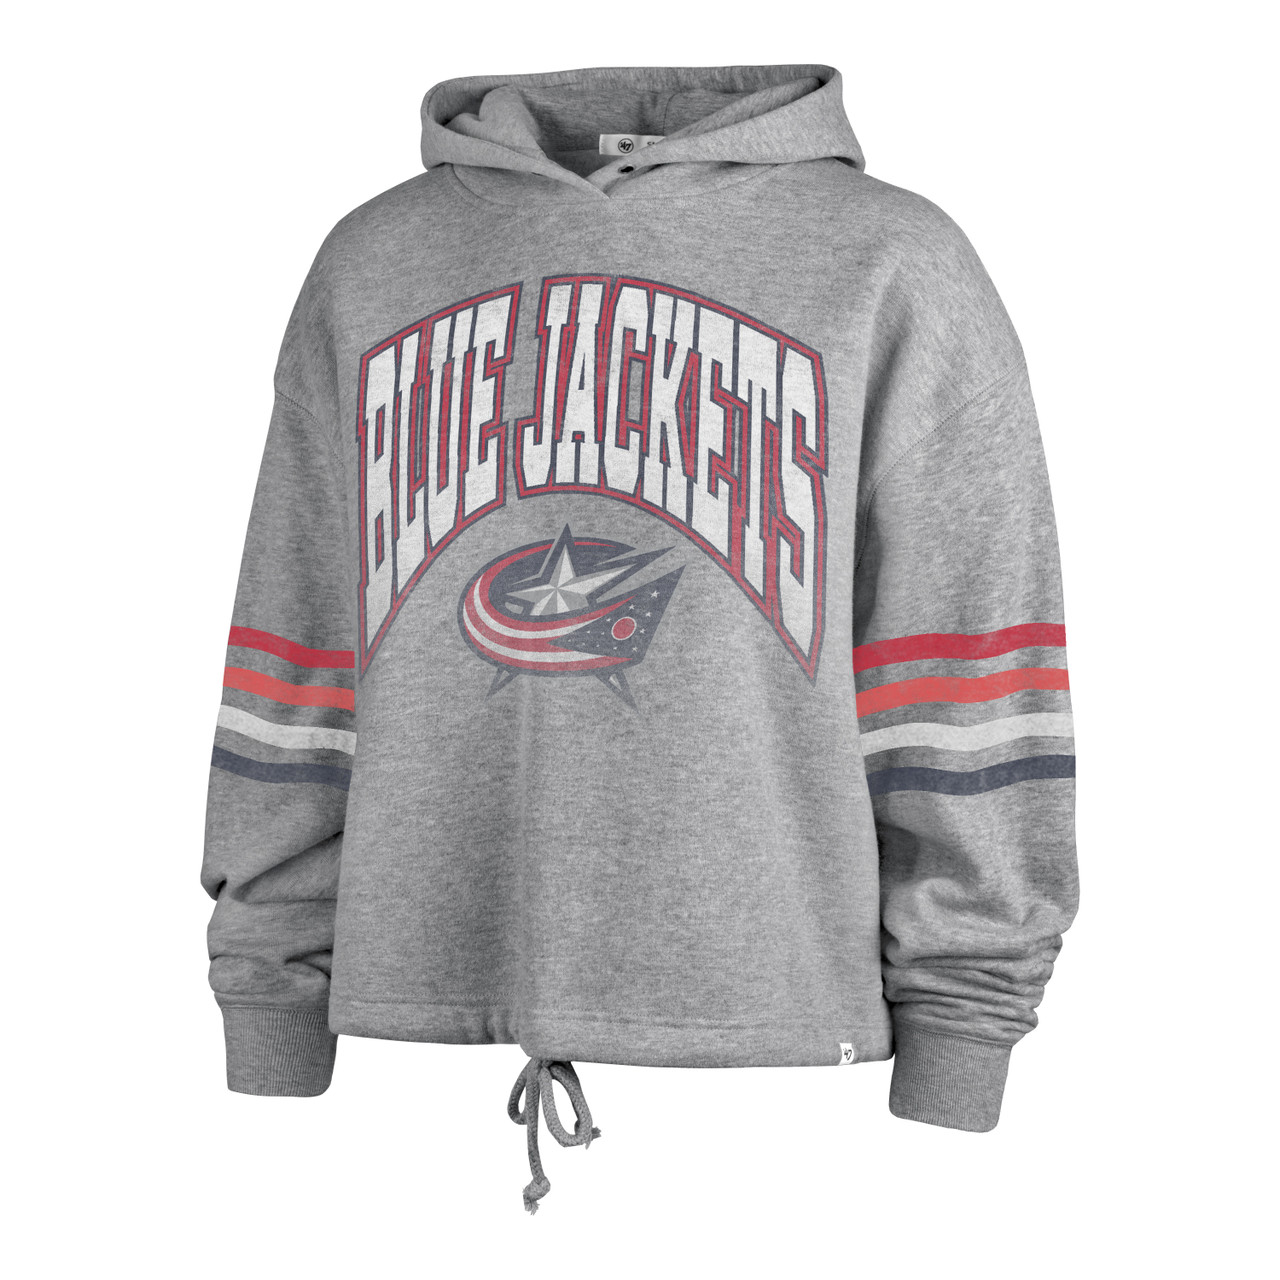 Chicago Blackhawks Jersey Sweater Men's Medium 47 Brand